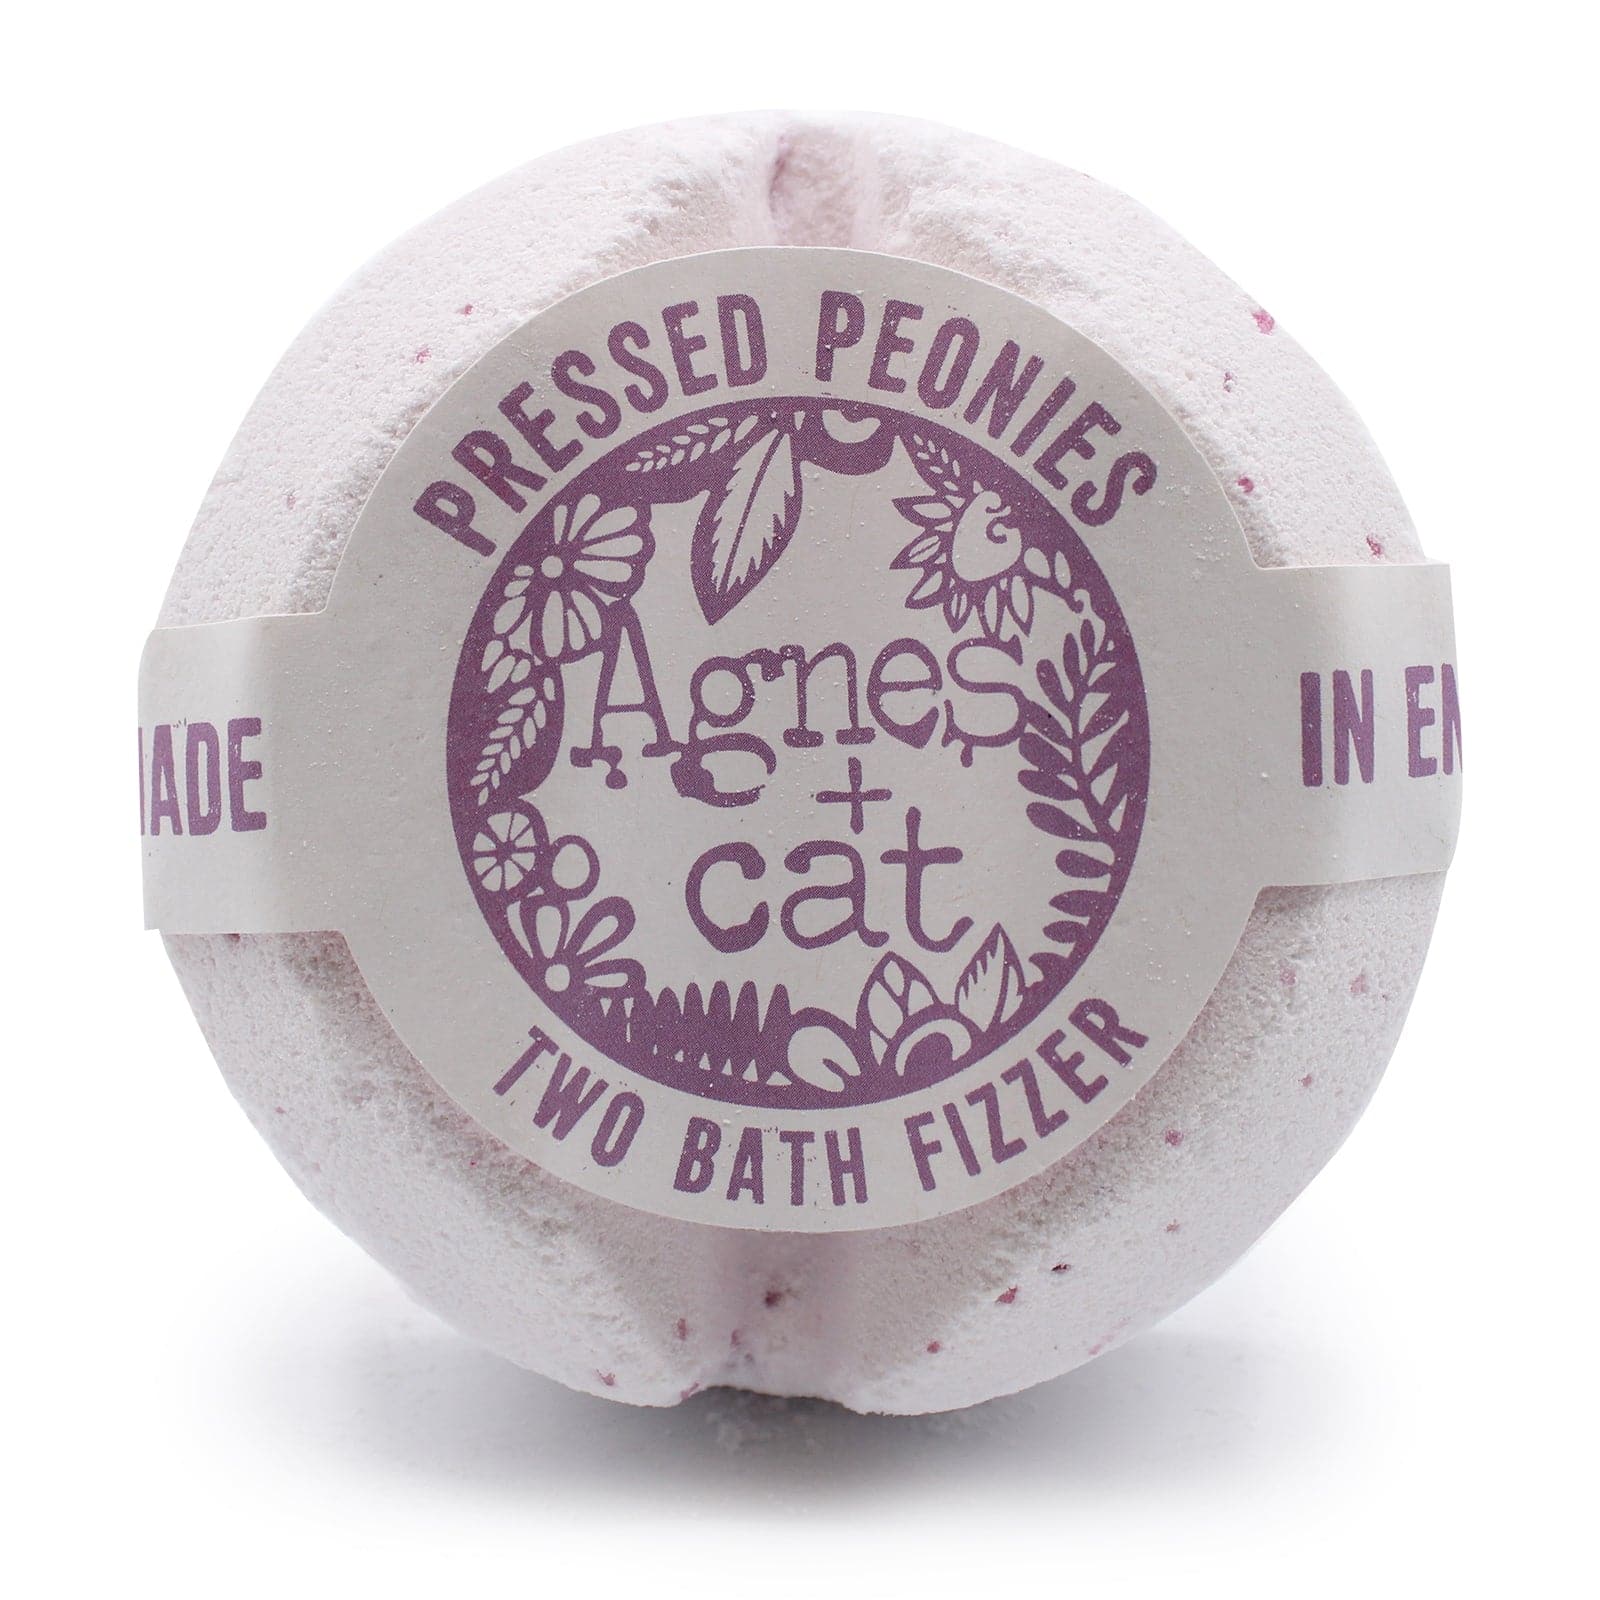 Bath Fizzer - Pressed Peonies